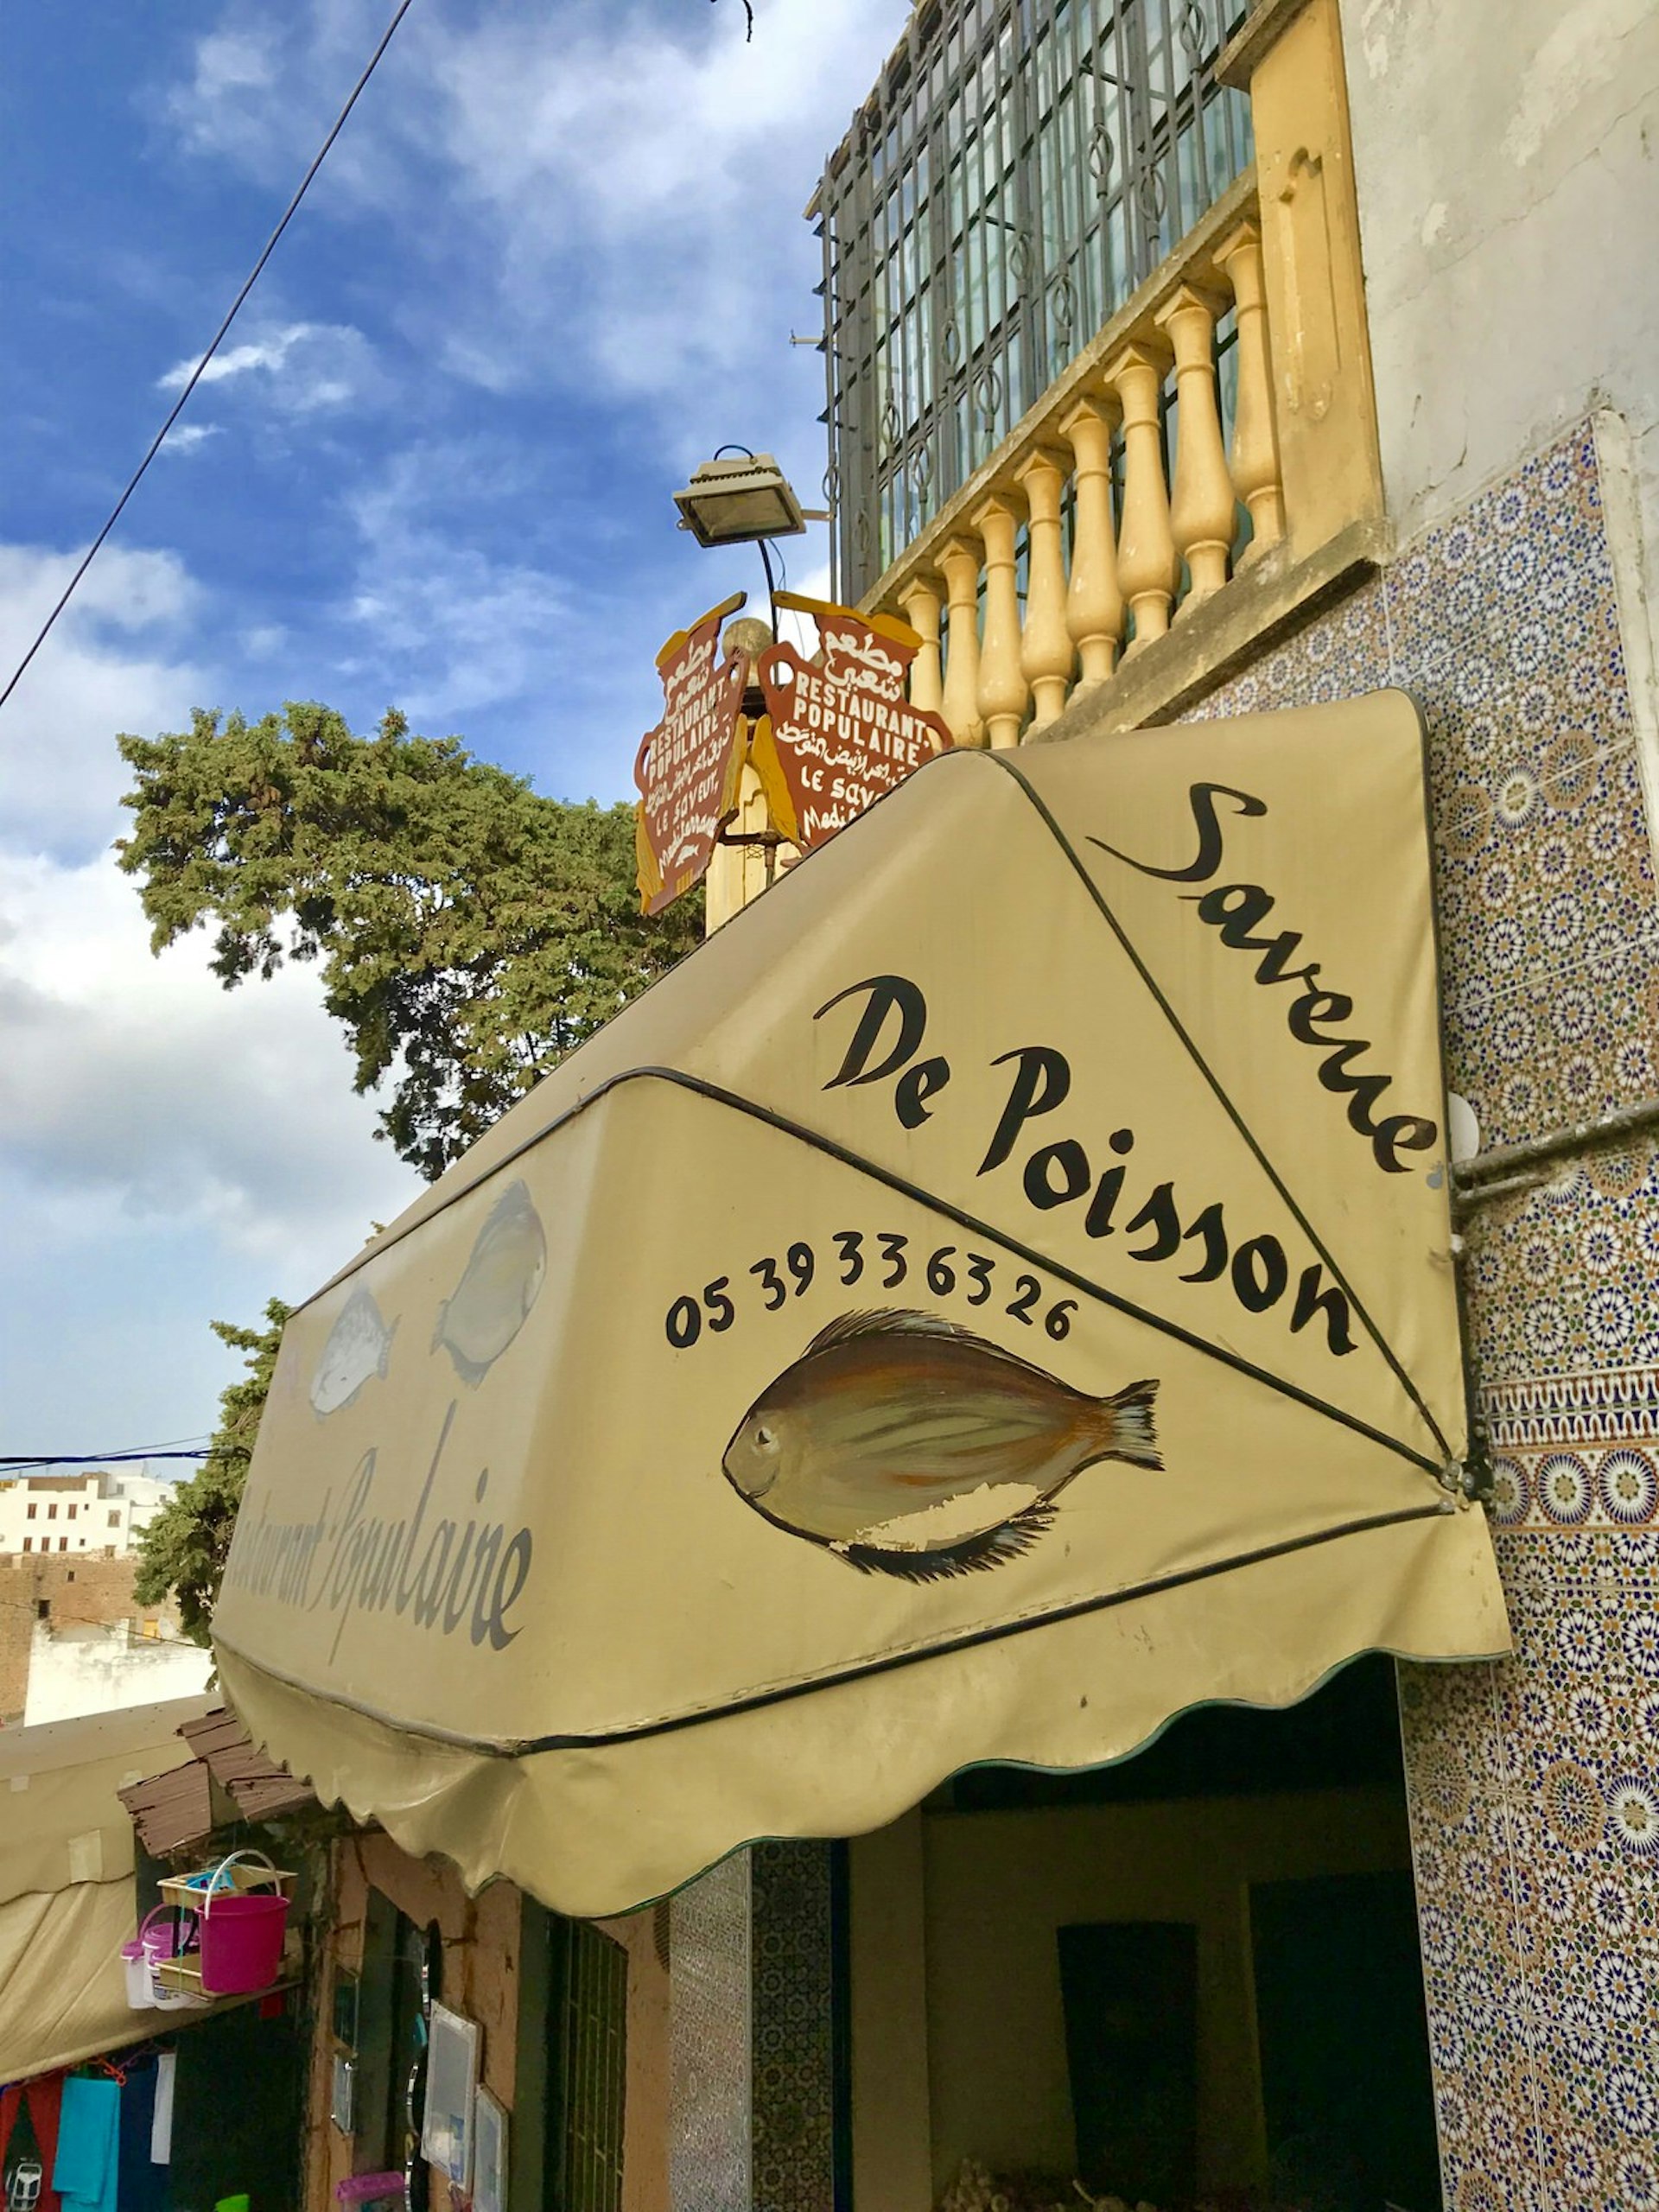 Exterior signage of Saveur de Poisson, Tangier, Morocco